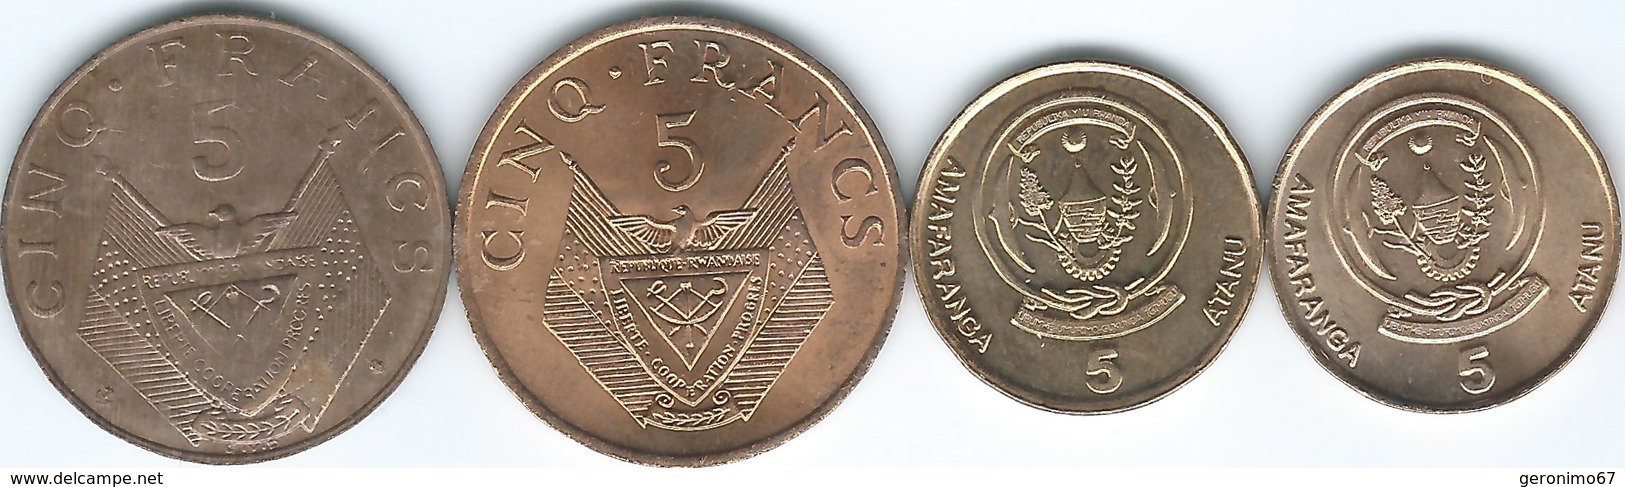 Rwanda - 5 Francs - 1965 (KM6) 1987 (KM13) 2003 (KM23) & 2009 (KM33) - Rwanda